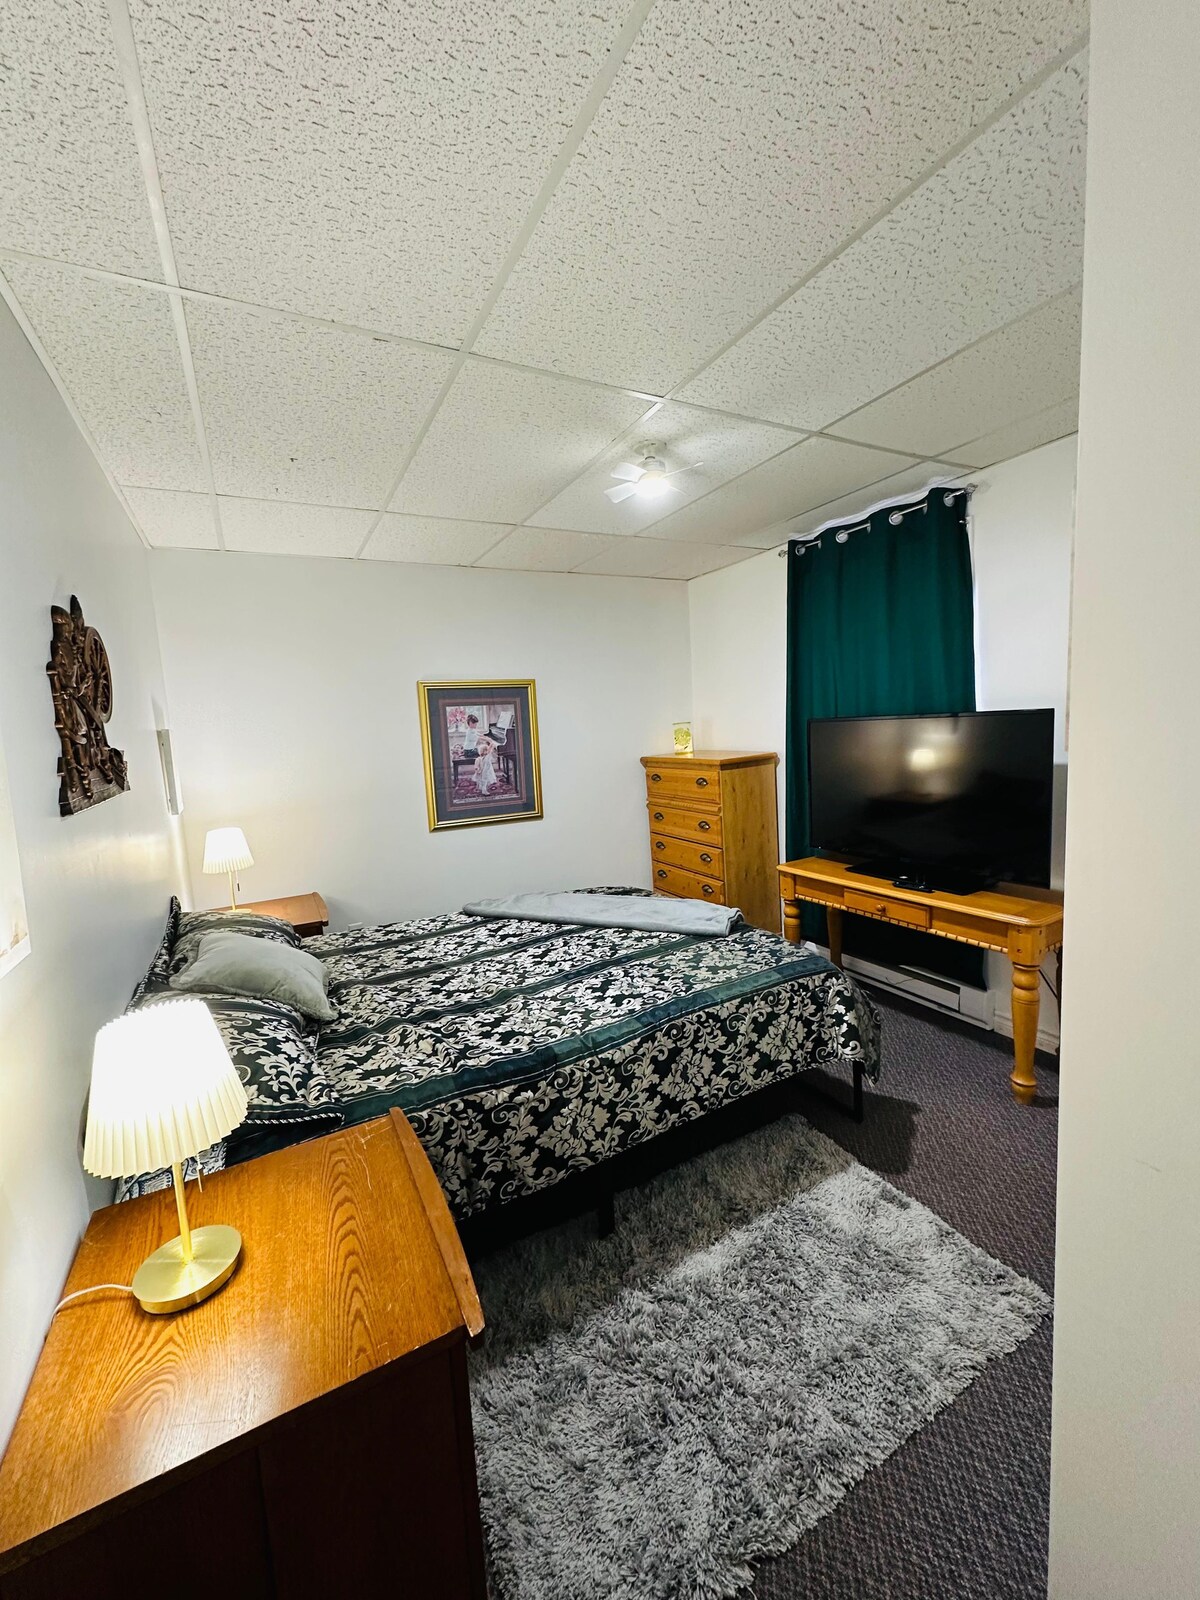 Amazing one bedroom apartment in Iroquois falls